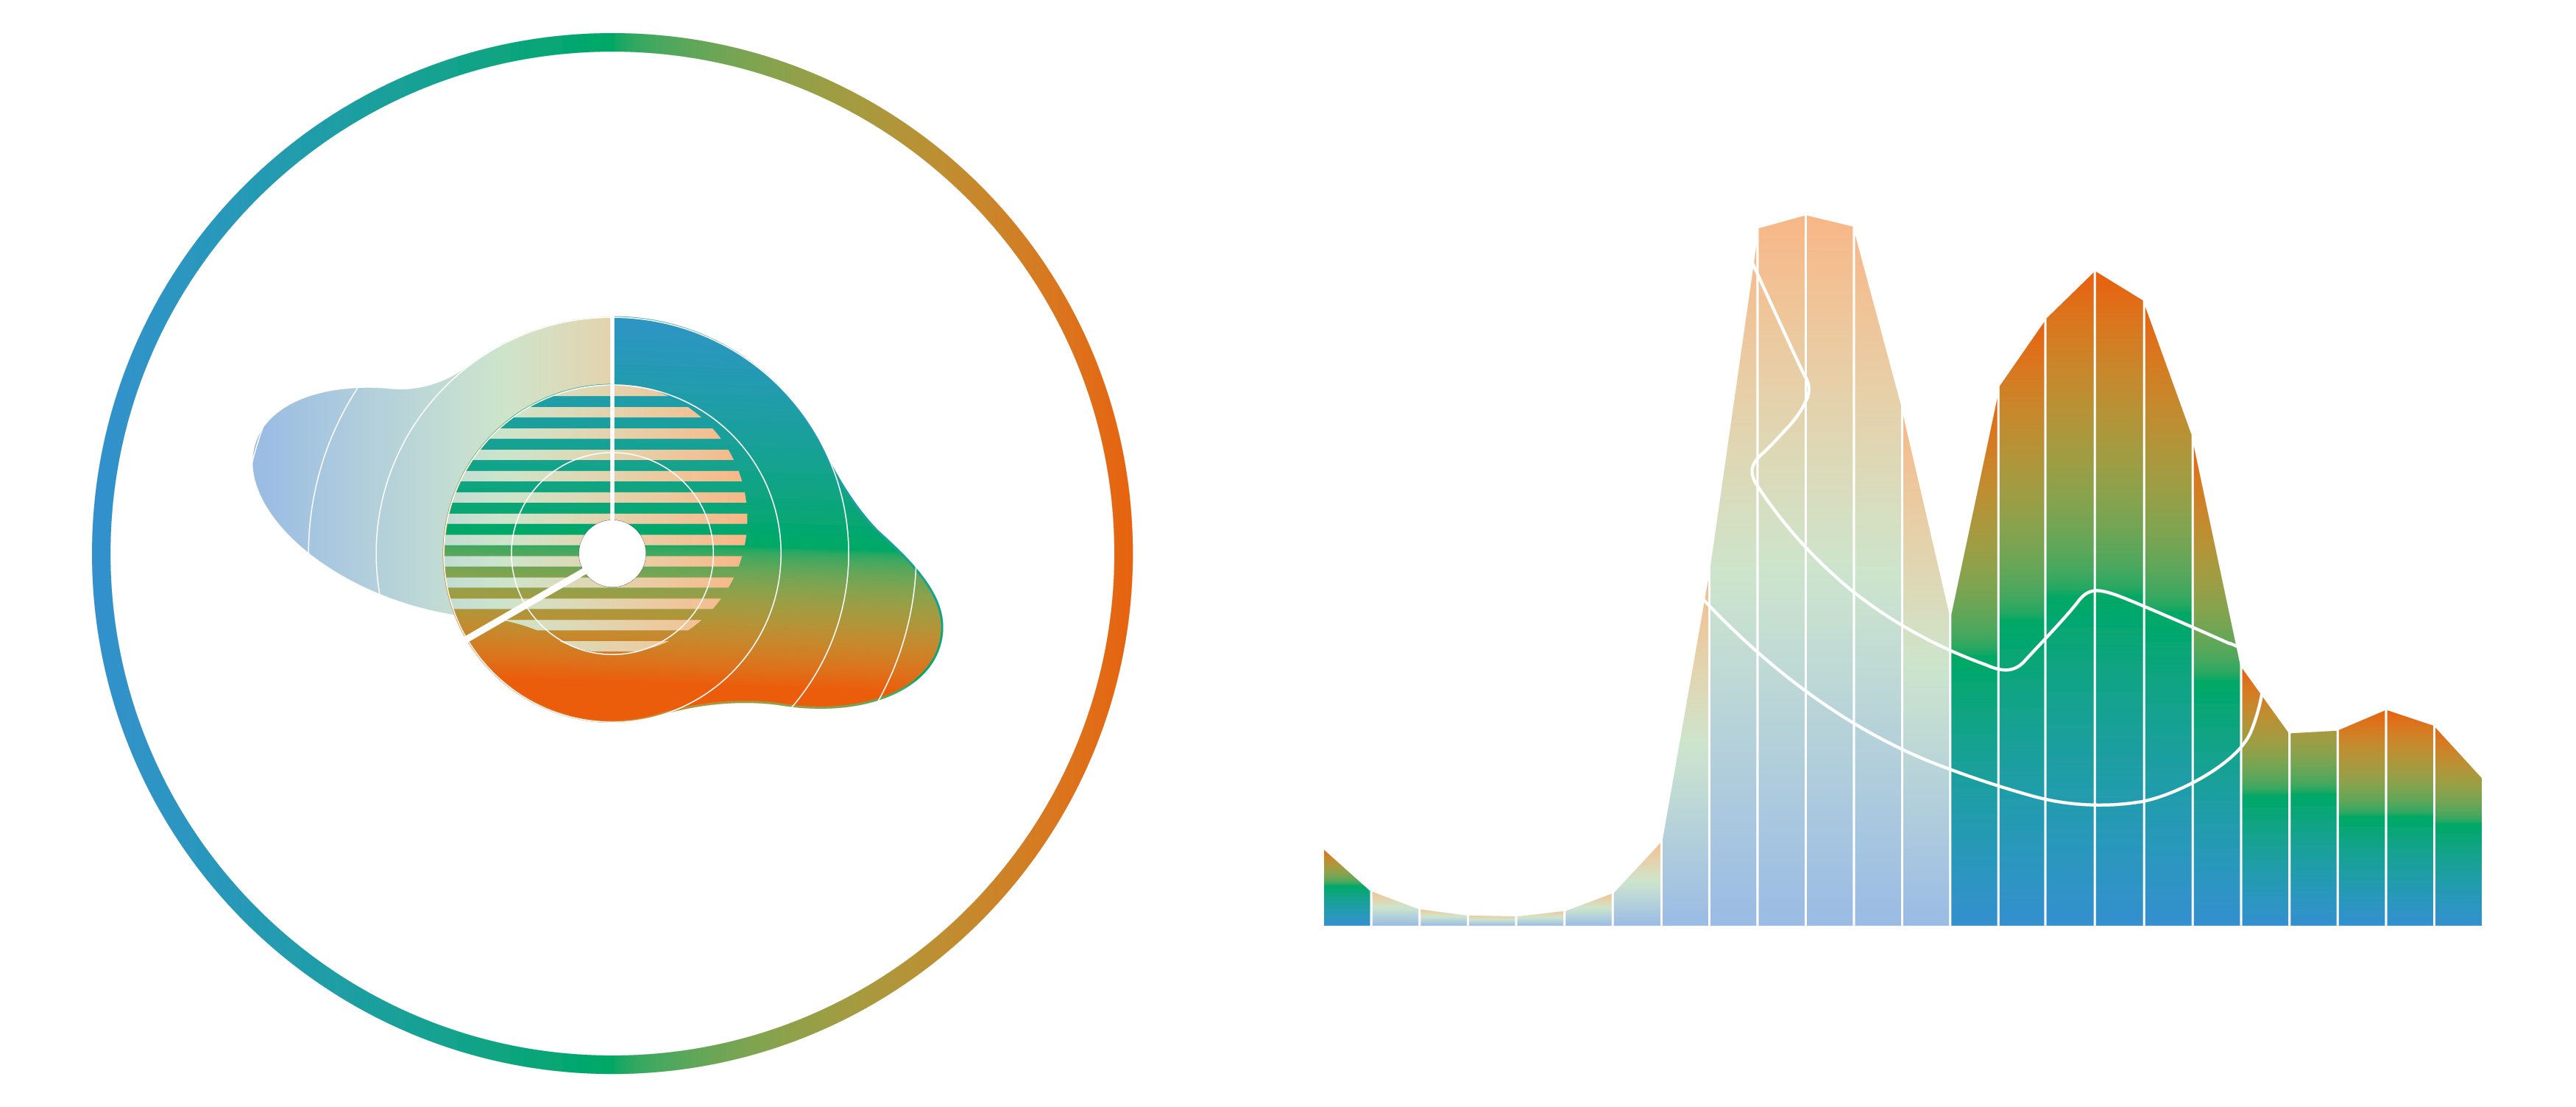 Esosphera calls by slot time